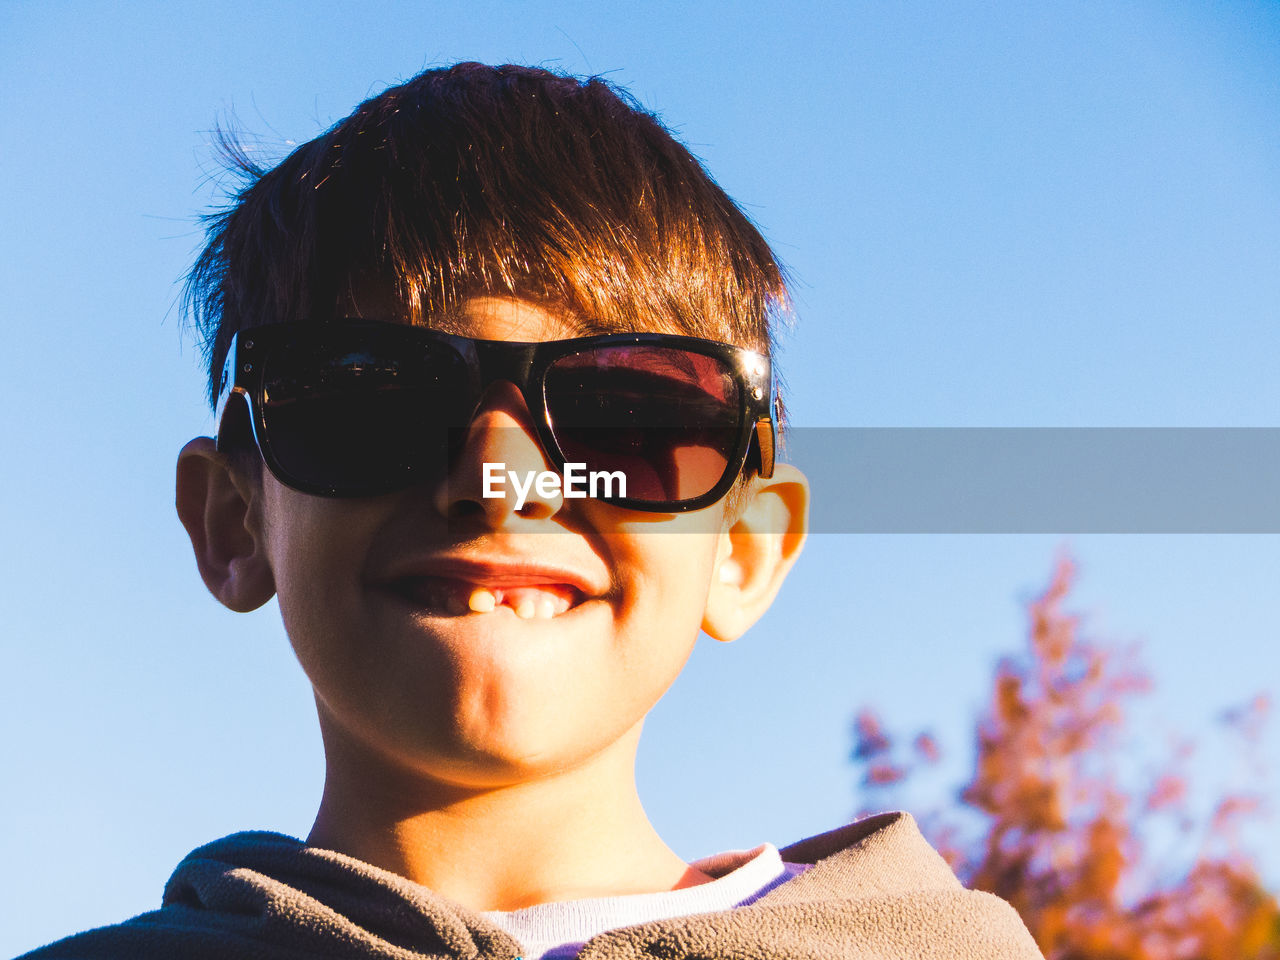 Portrait of boy wearing sunglasses against clear blue sky